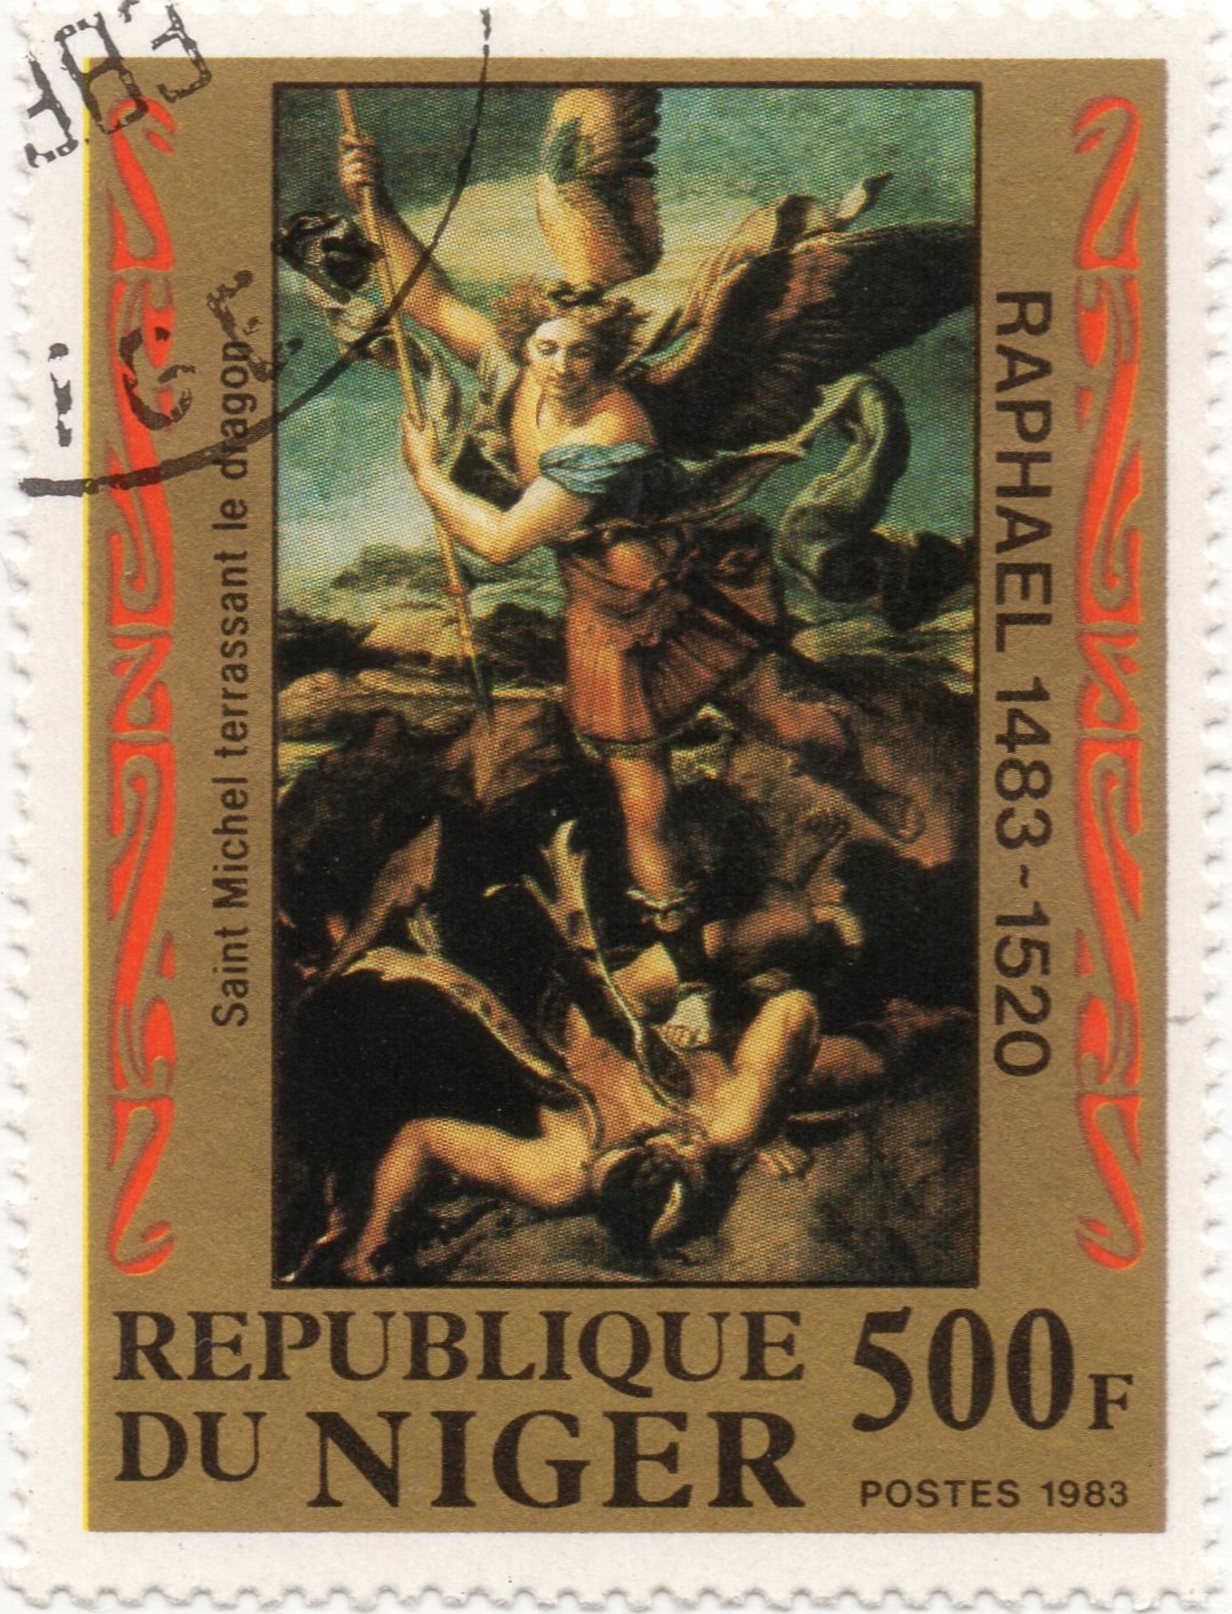 nft #8 St. Michael Vanquishing Satan Raphael 1483 - 1520 Republic of Niger 500 f. postes 1983